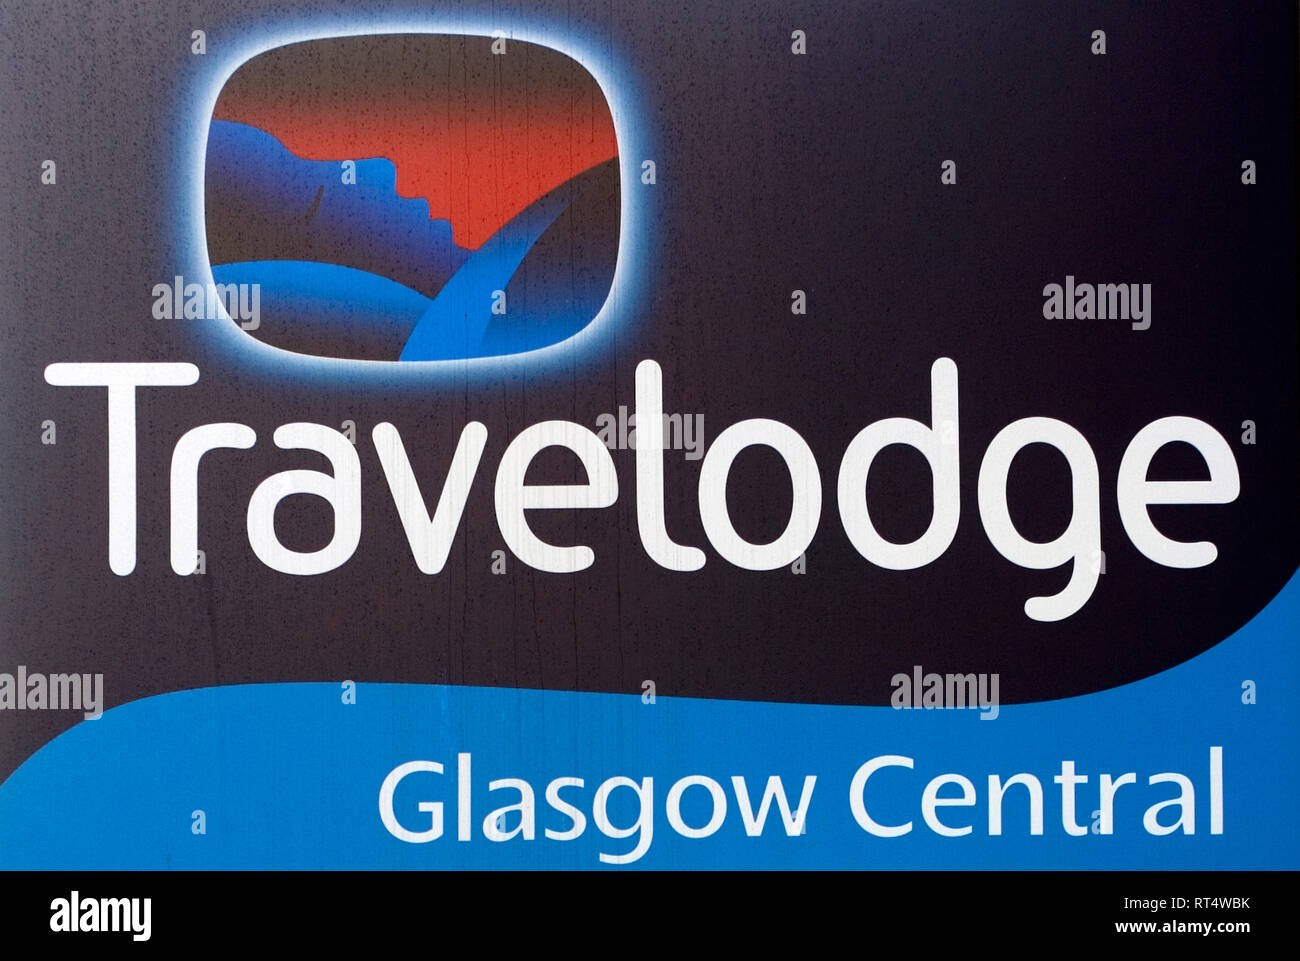 Tourism: Travelodge Glasgow Central, Scotland, United Kingdom Stock Photo